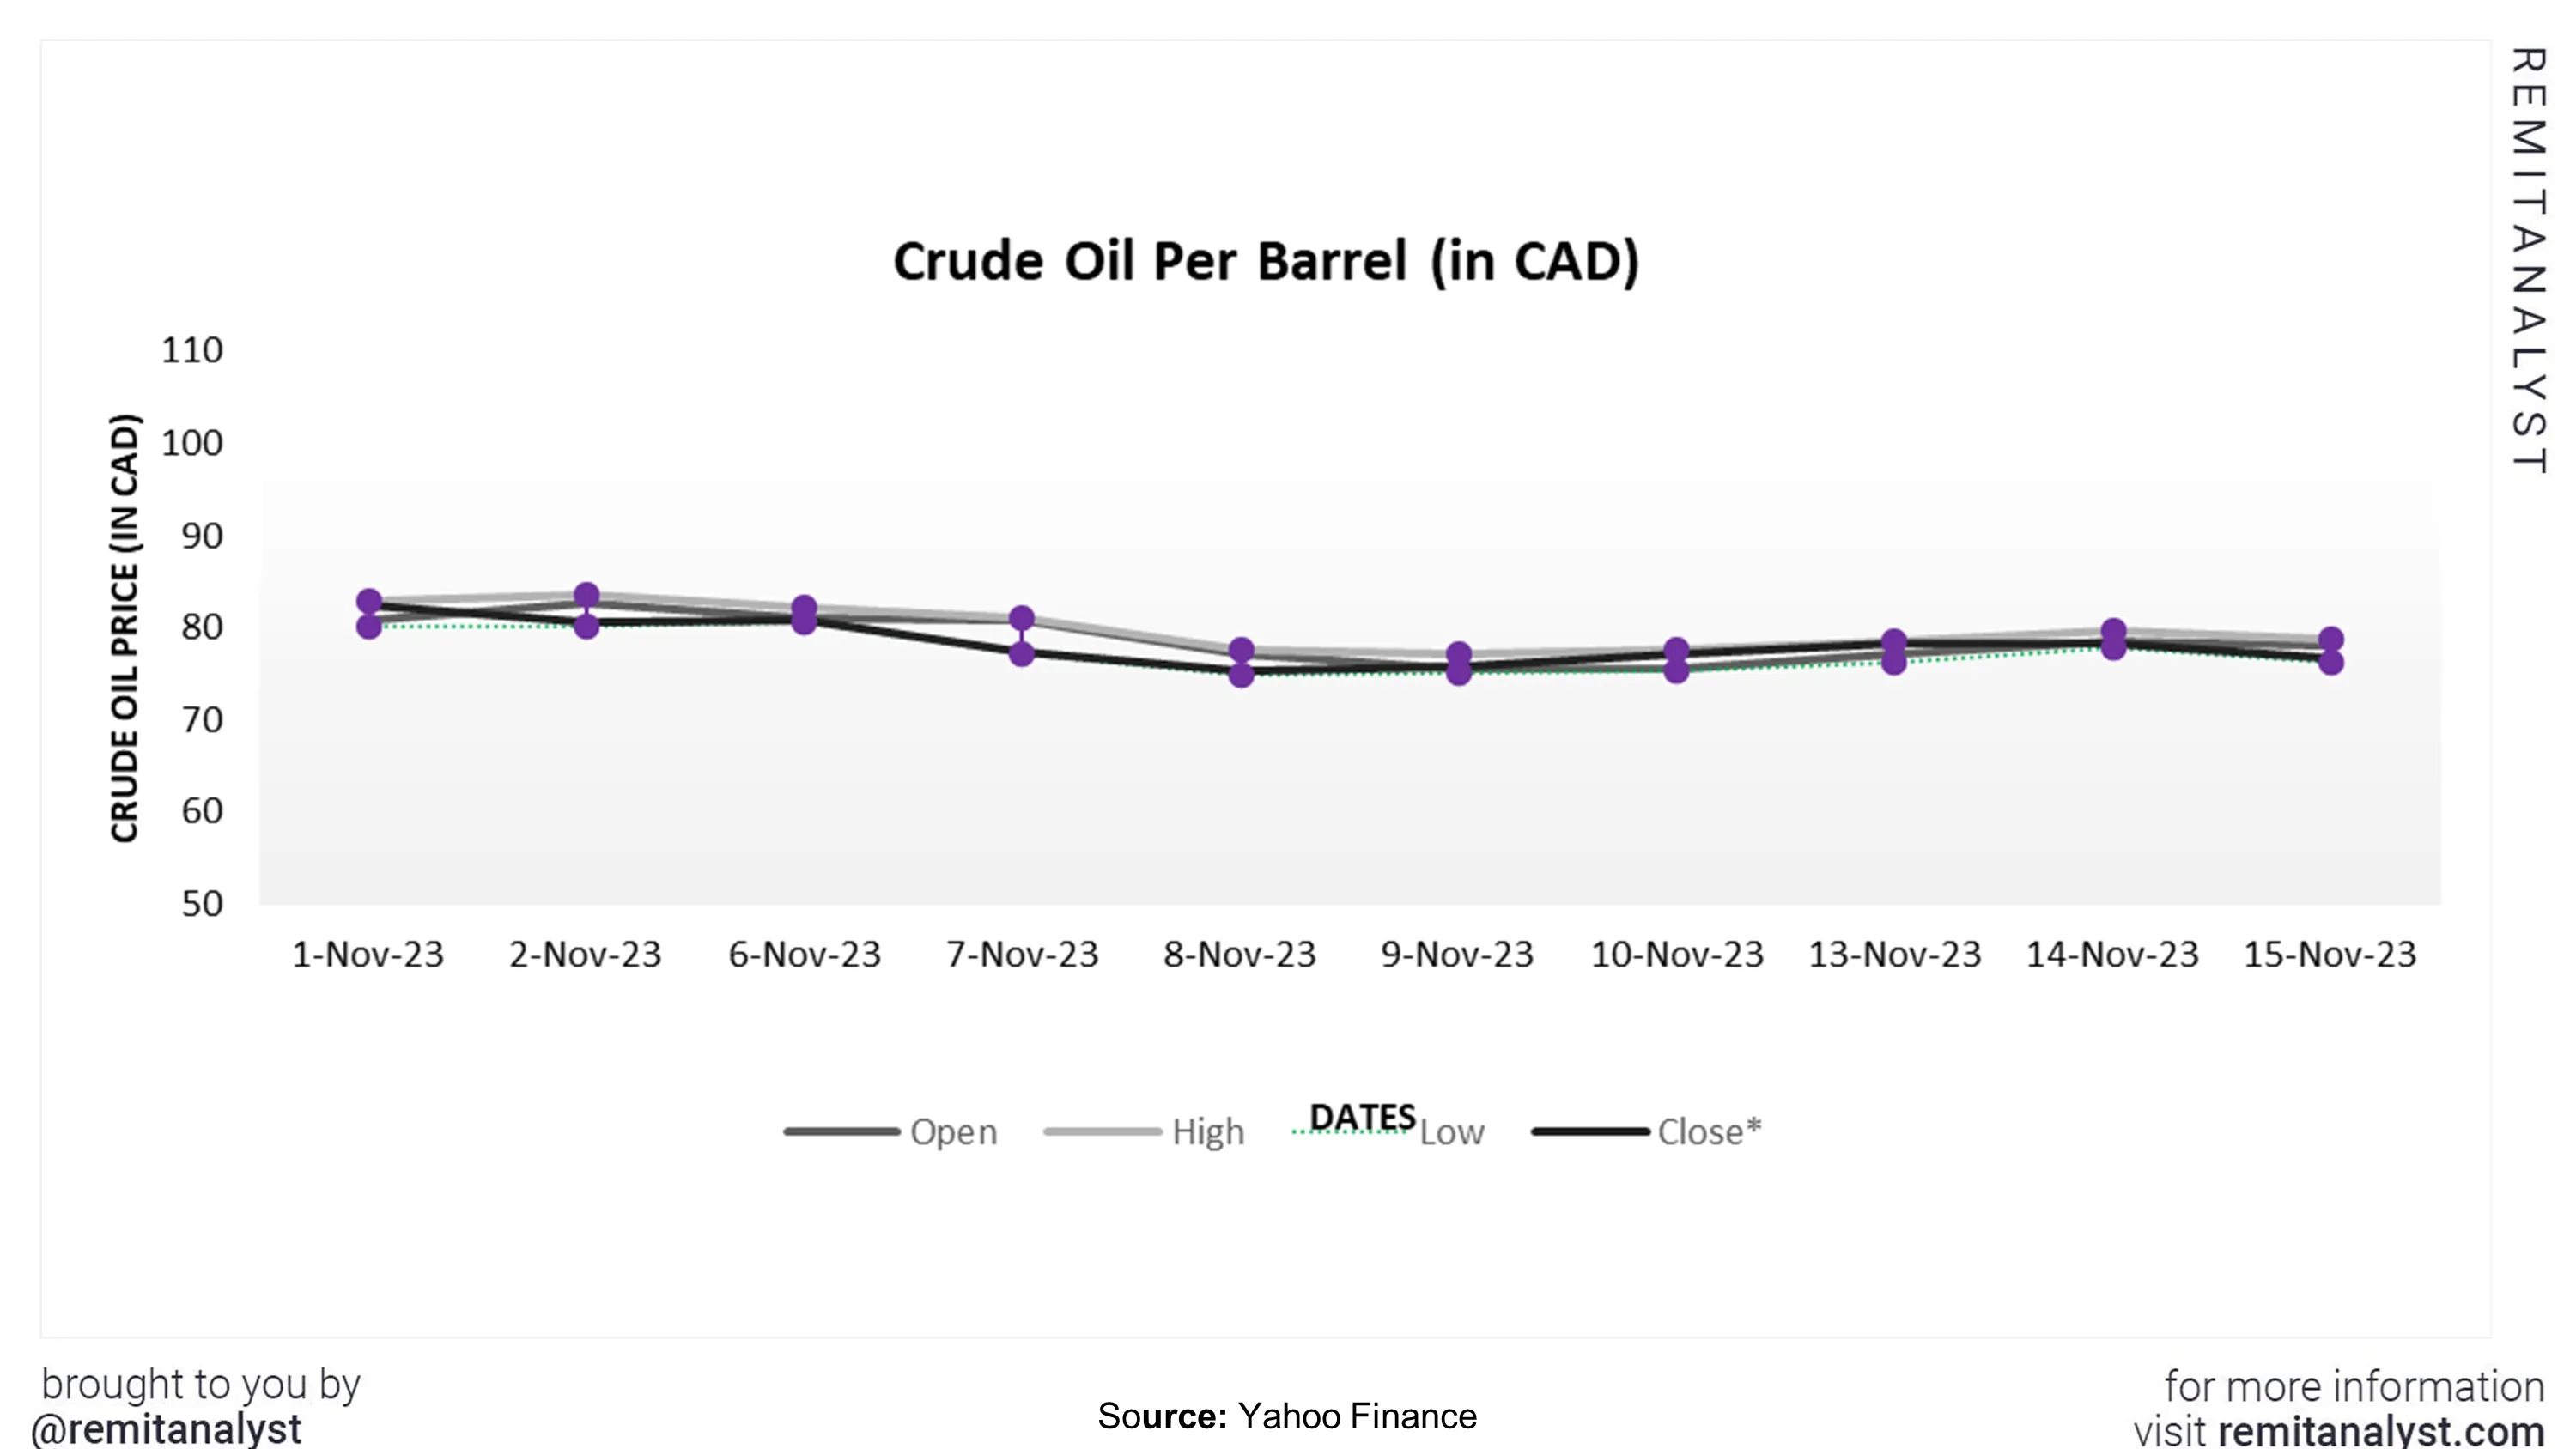 crude-oil-prices-canada-from-1-nov-2023-to-15-nov-2023